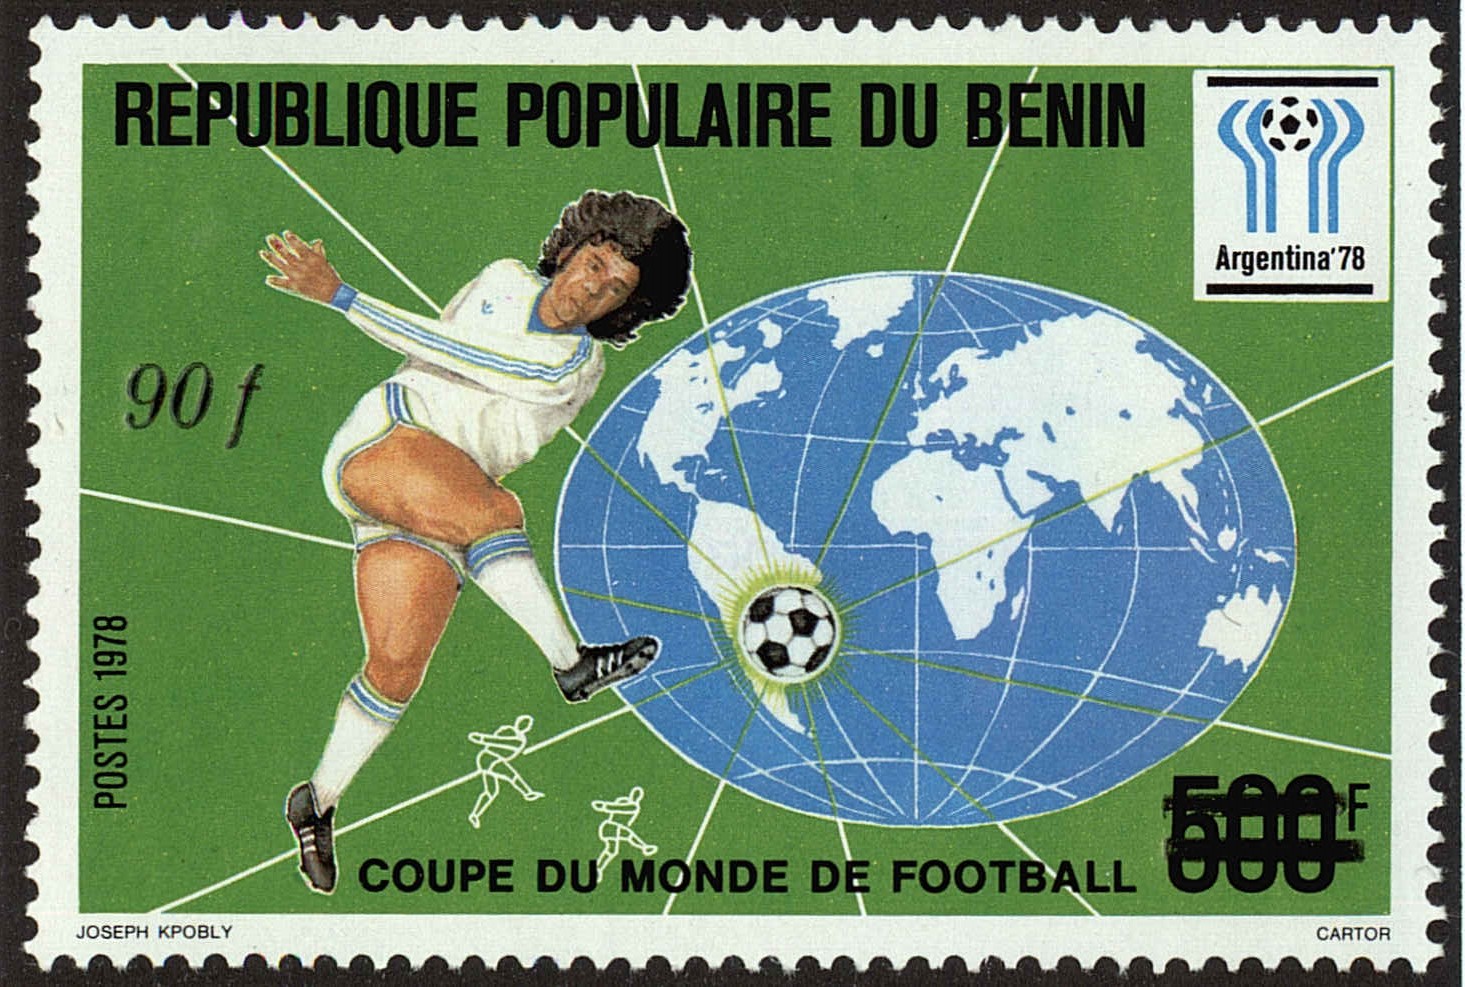 Front view of Benin 595 collectors stamp